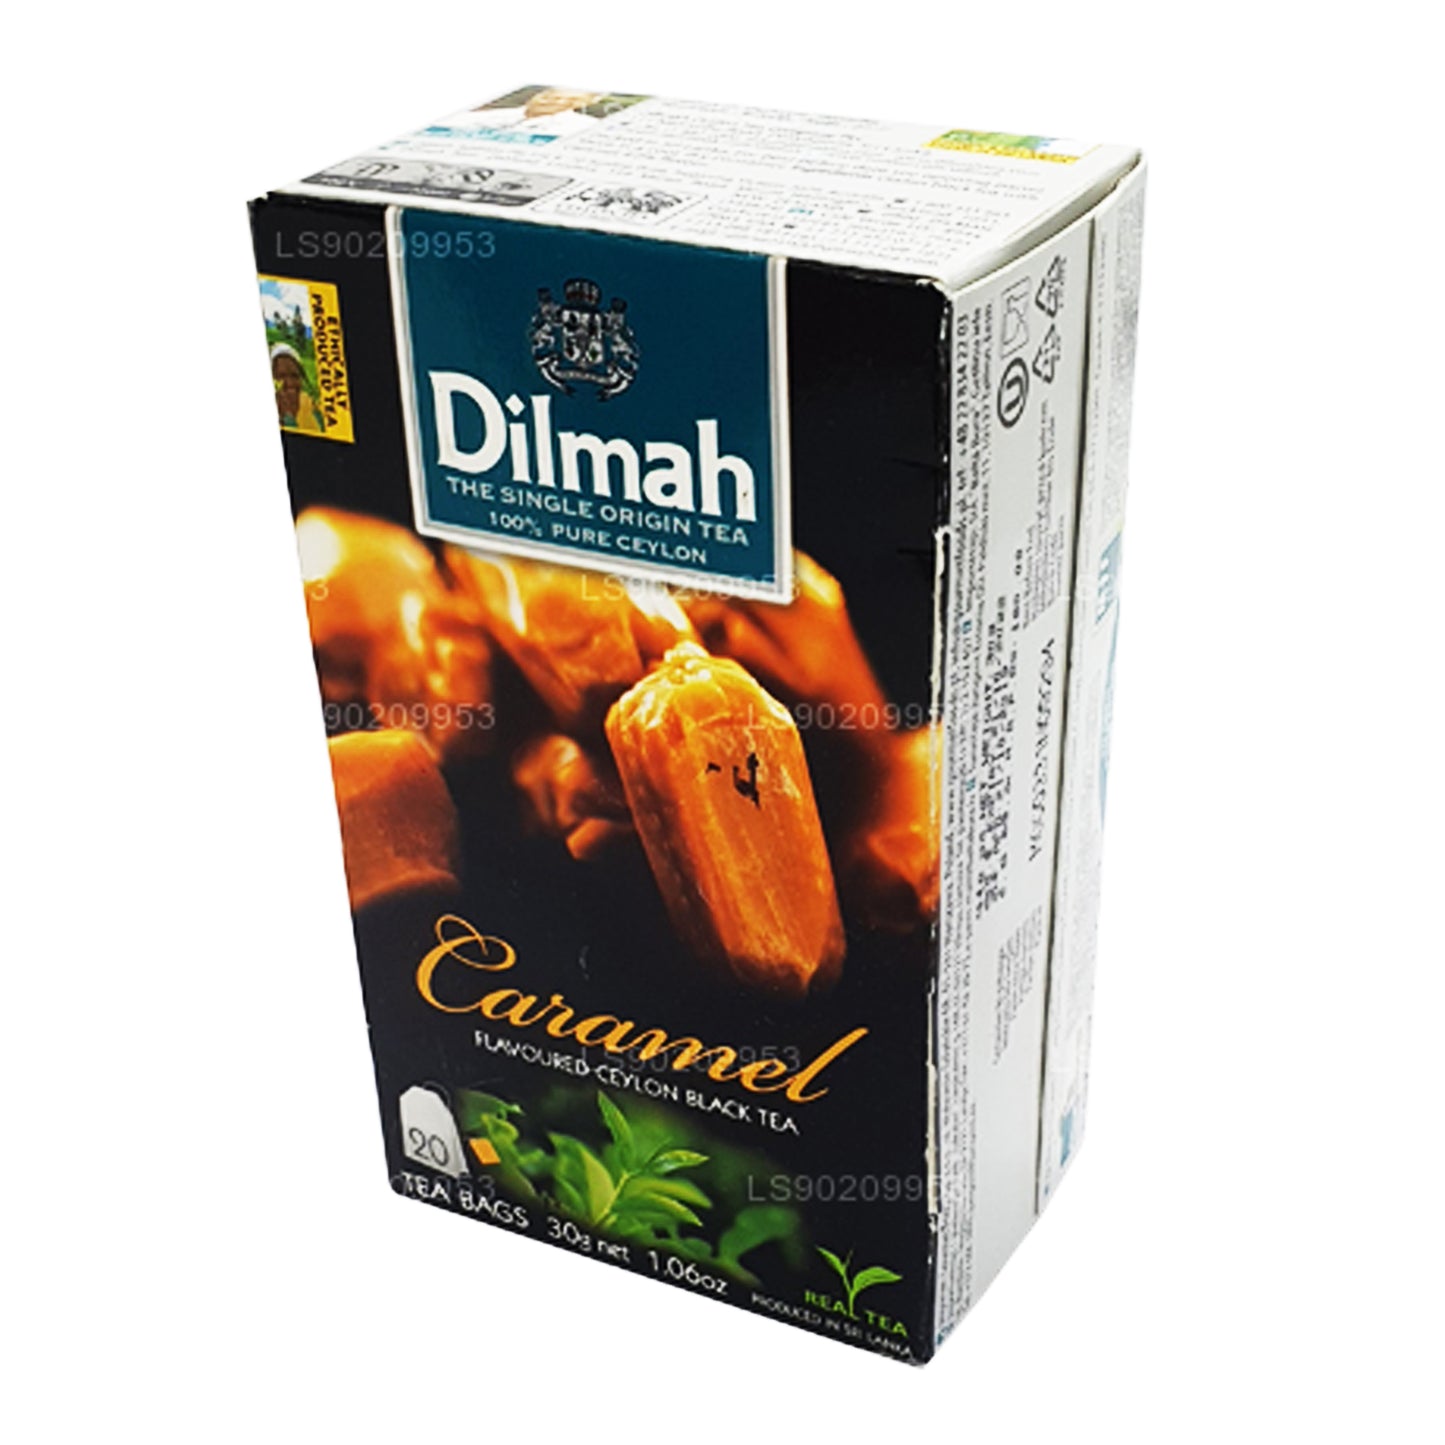 Dilmah thee met karamelsmaak (40 g) 20 theezakjes